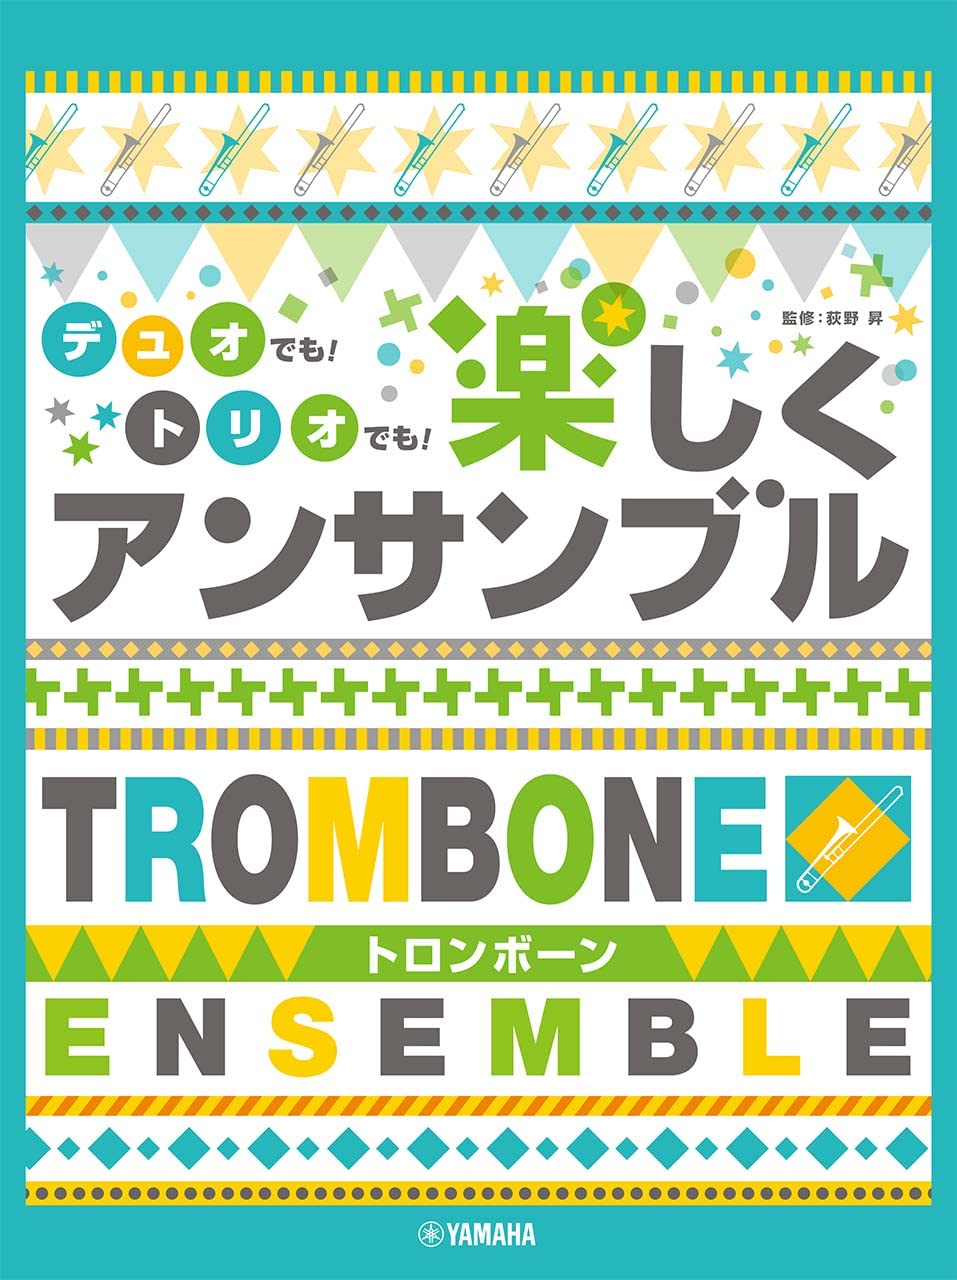 Popular Songs for Trombone Ensemble (Pre-Intermediate)